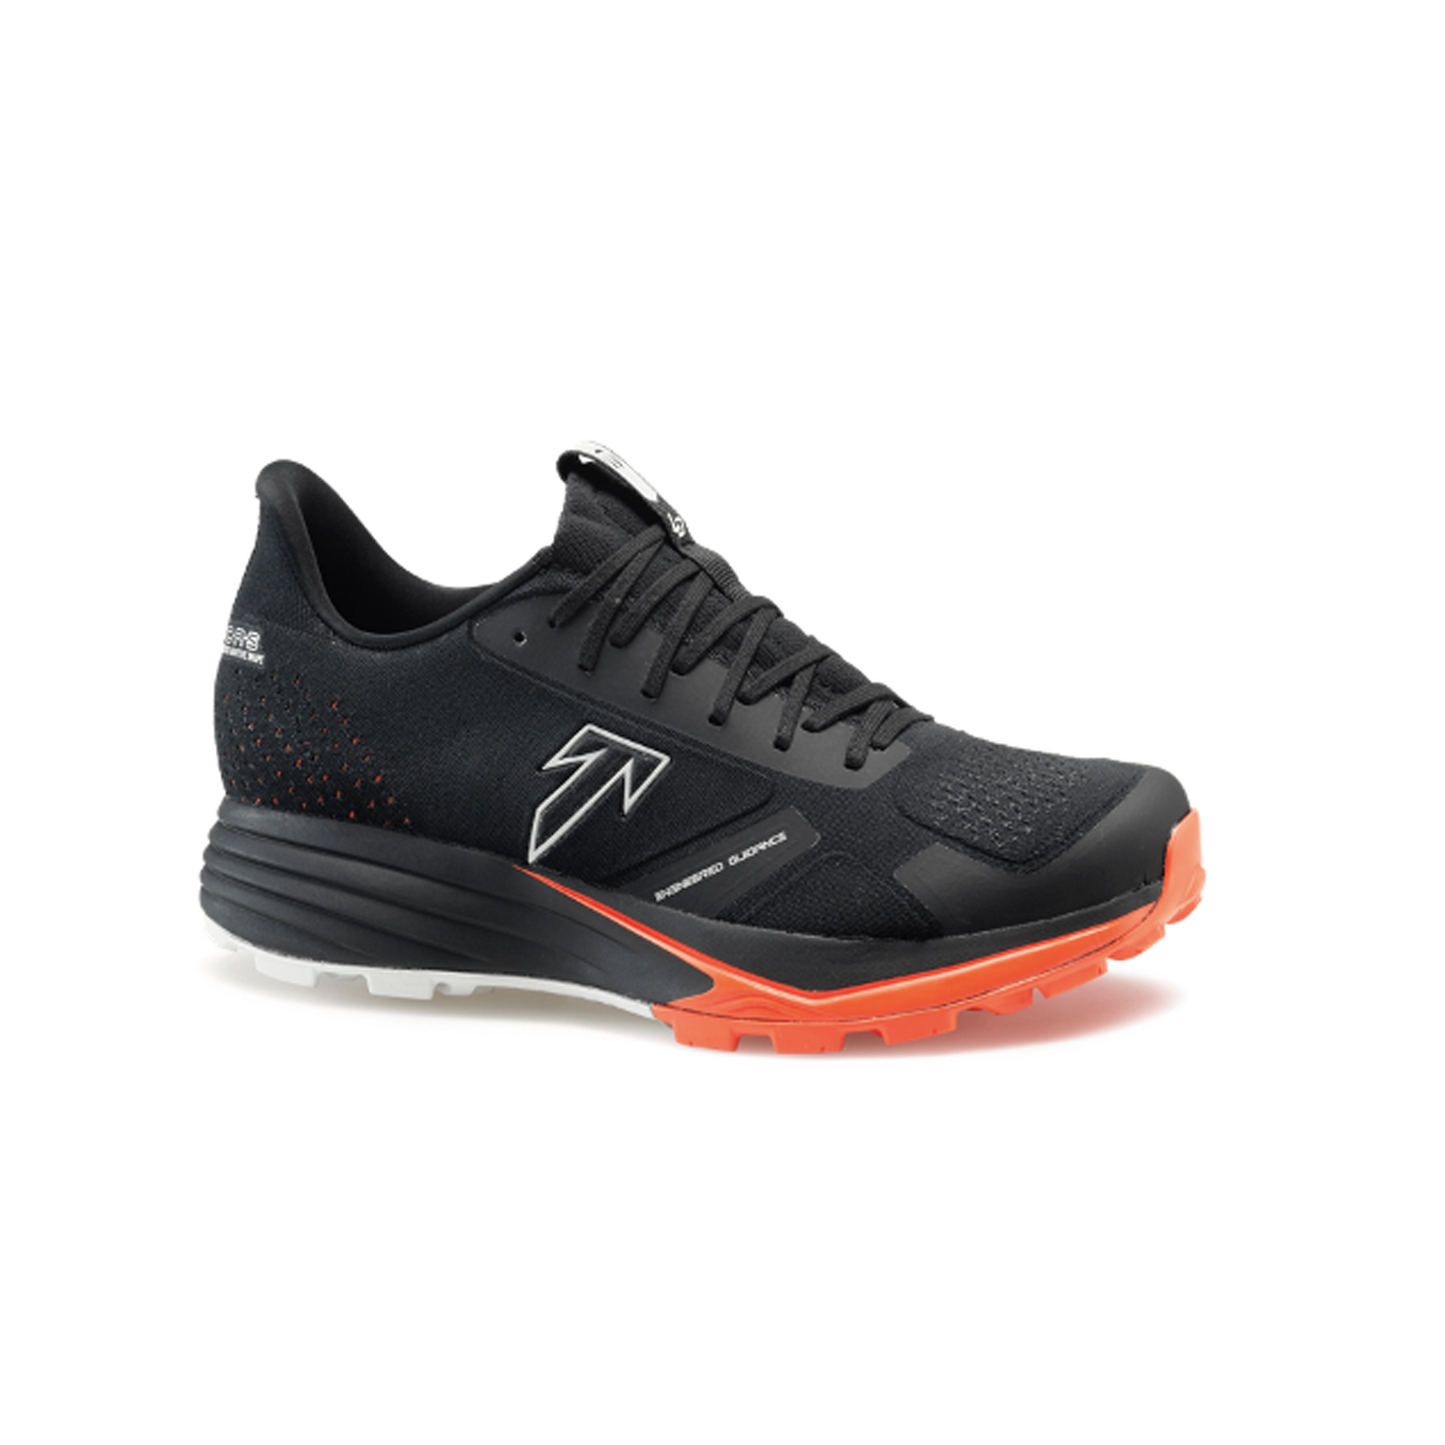 Side view of the Men's Tecnica Origin LD trail running shoe in the colour Black/Lava